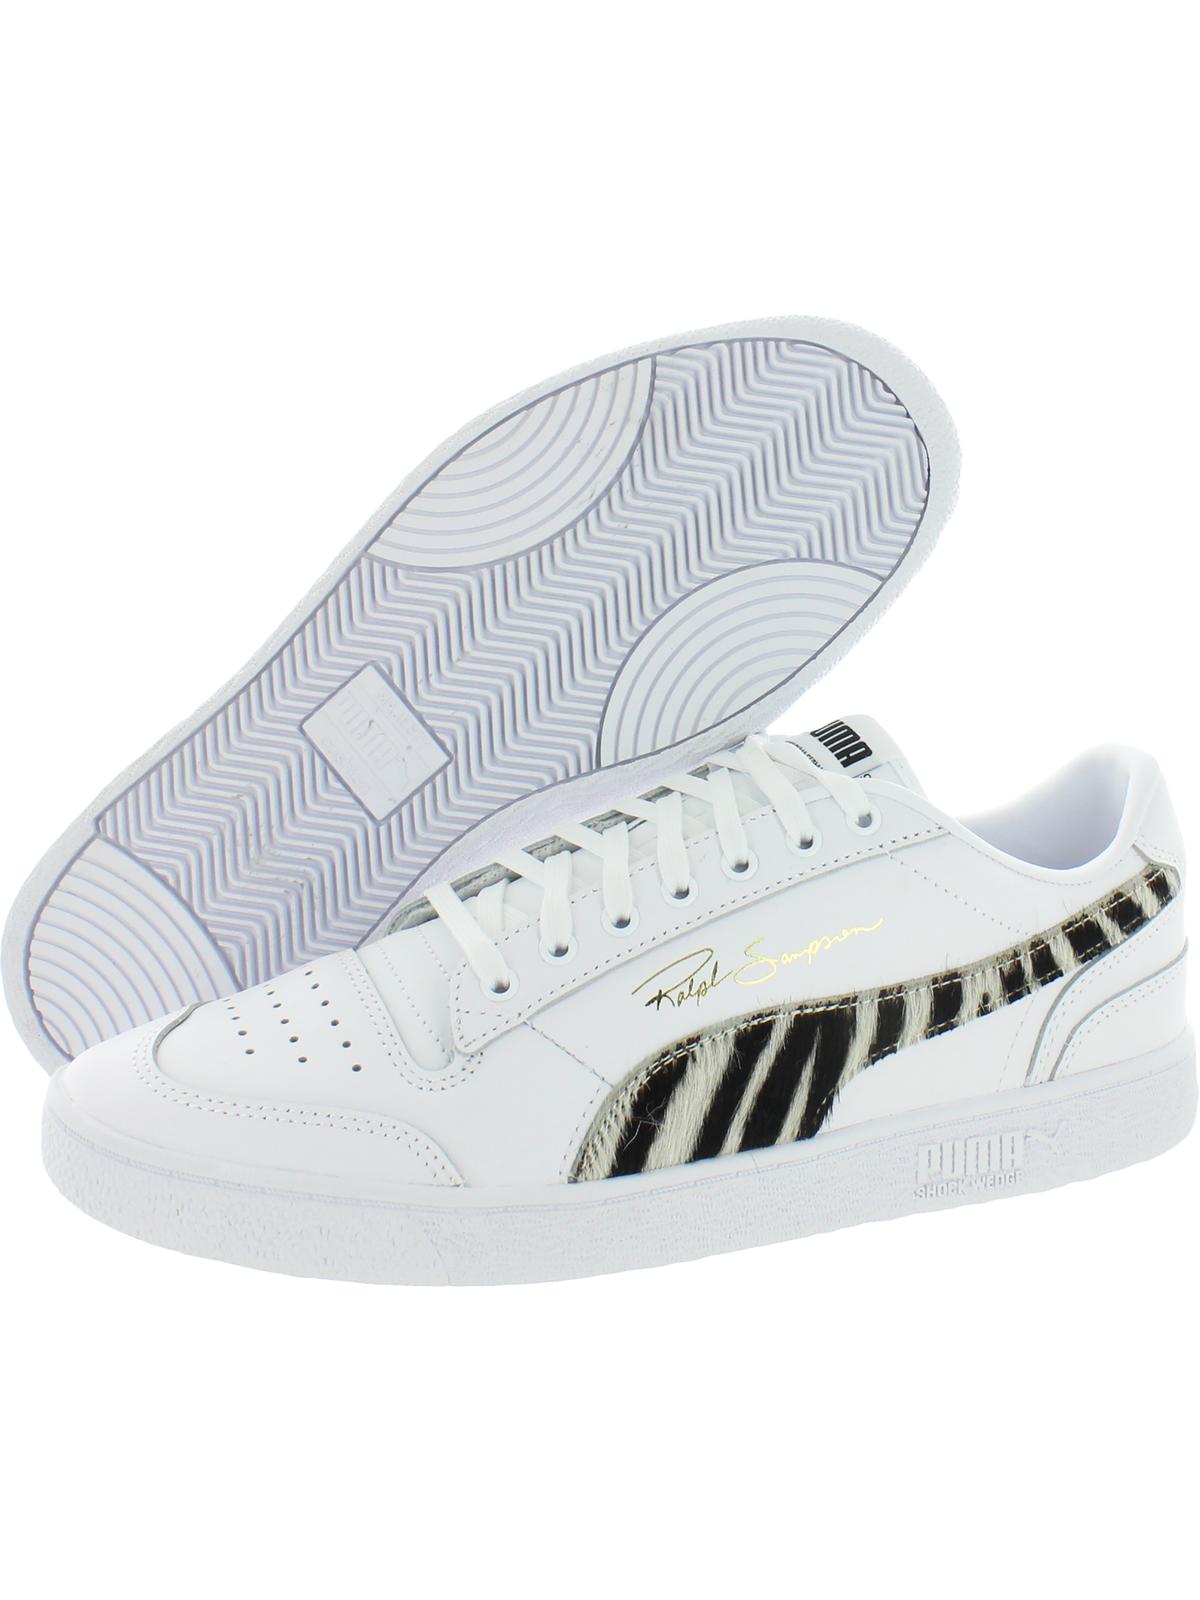 Puma Mens Ralph Sampson Lo Wild Calf Hair Fashion Sneakers White 8 Medium (D) - image 2 of 3